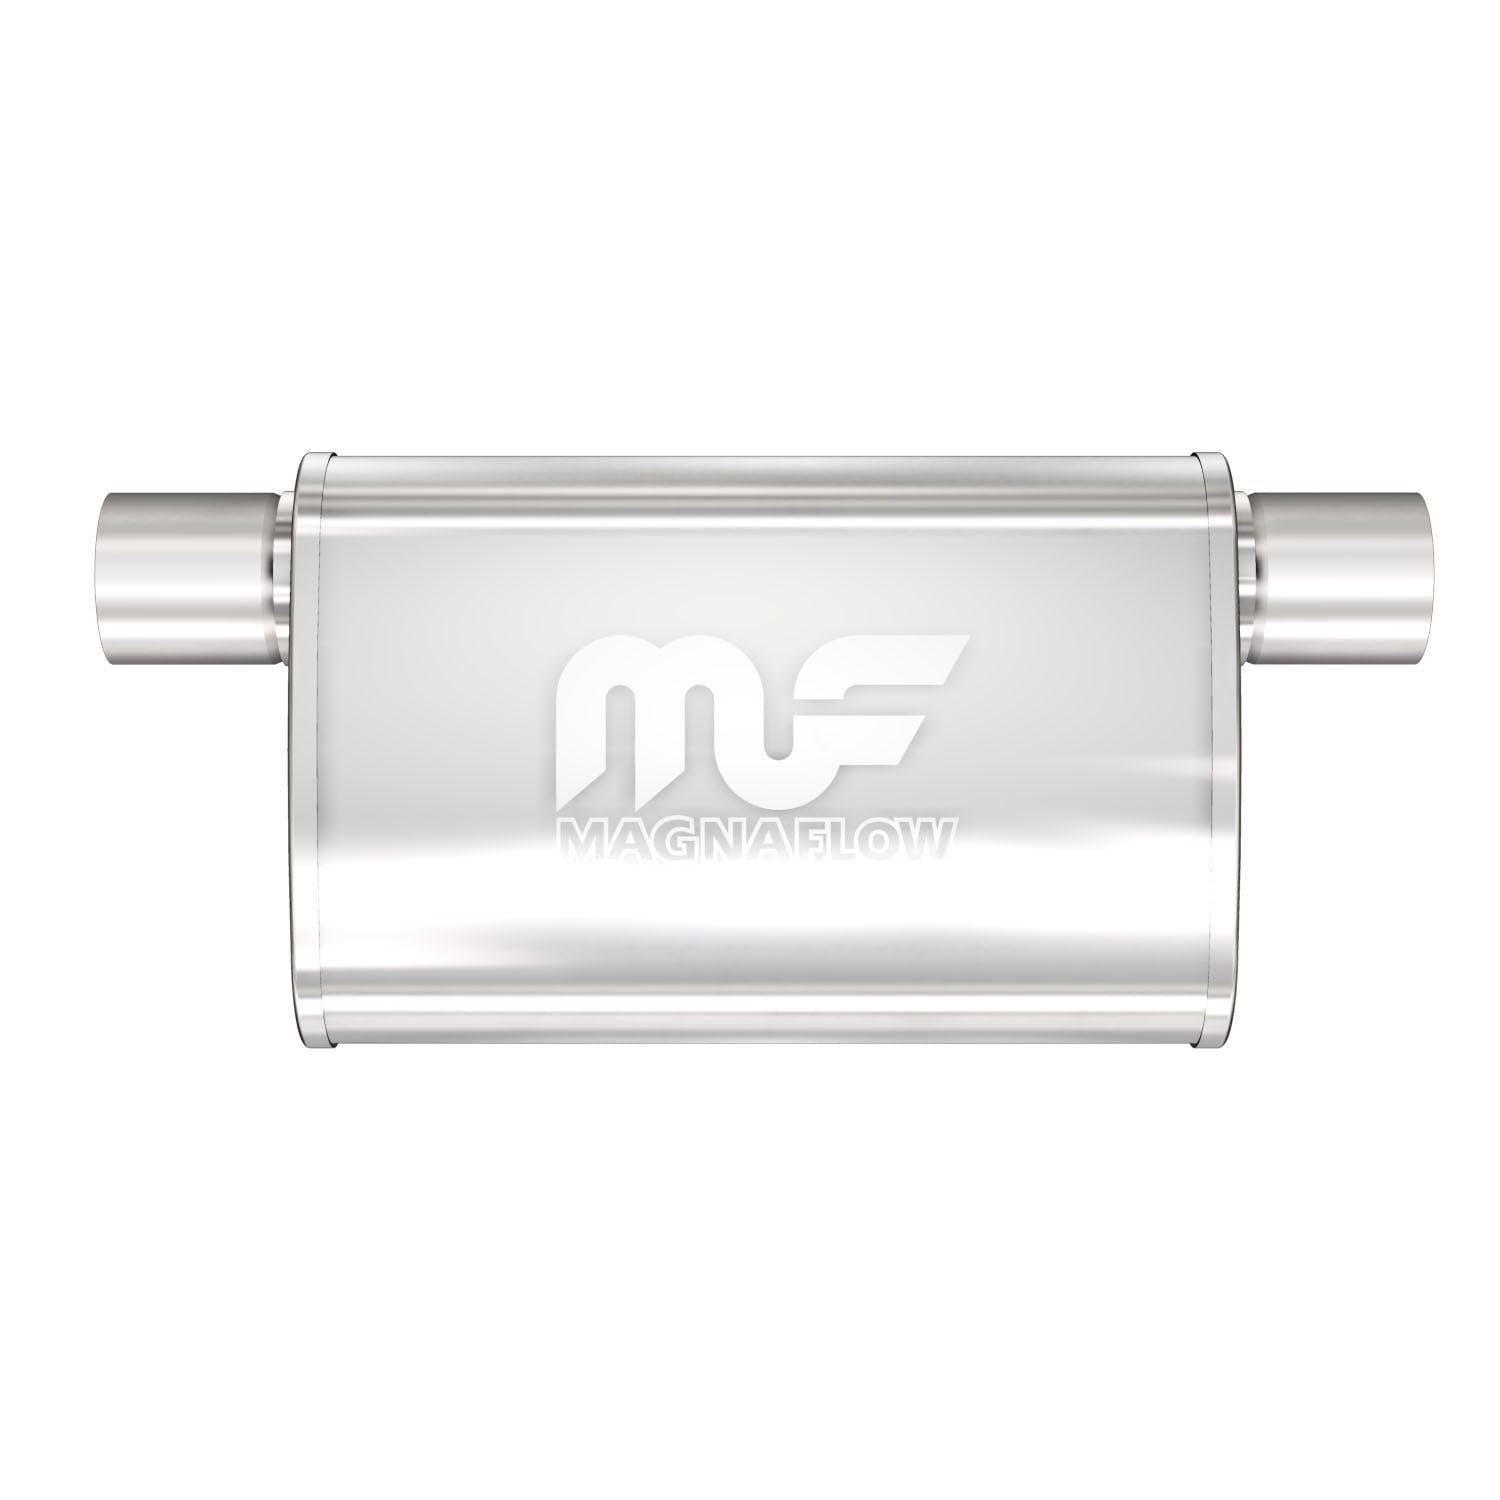 MagnaFlow Exhaust Products 11375 Universal Muffler